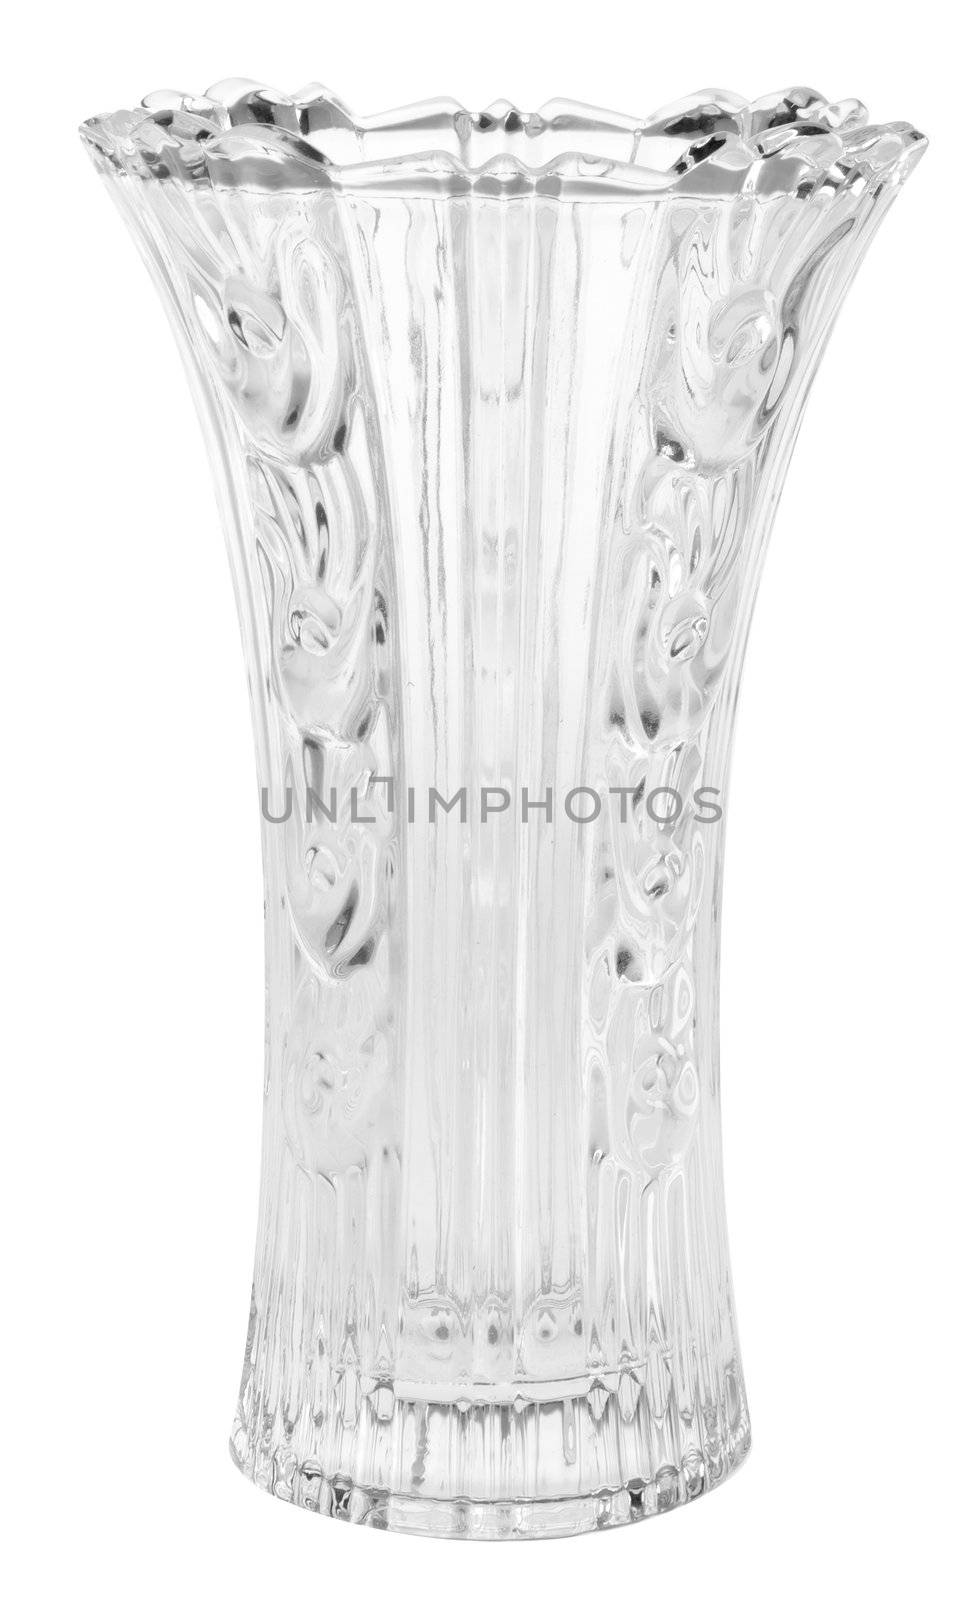 Glass vase on a background.